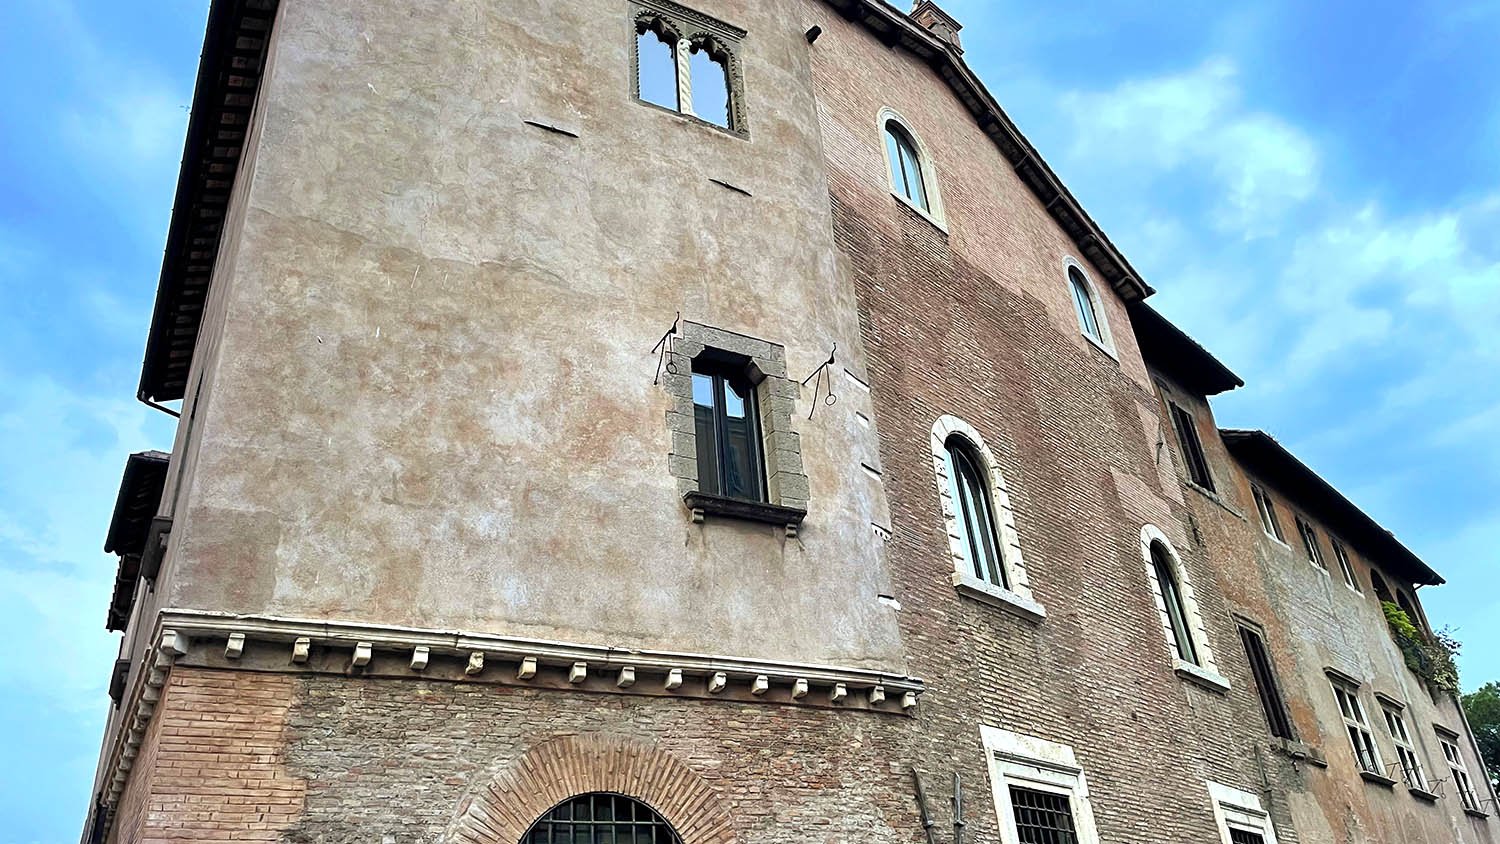 A classic Trastevere building.